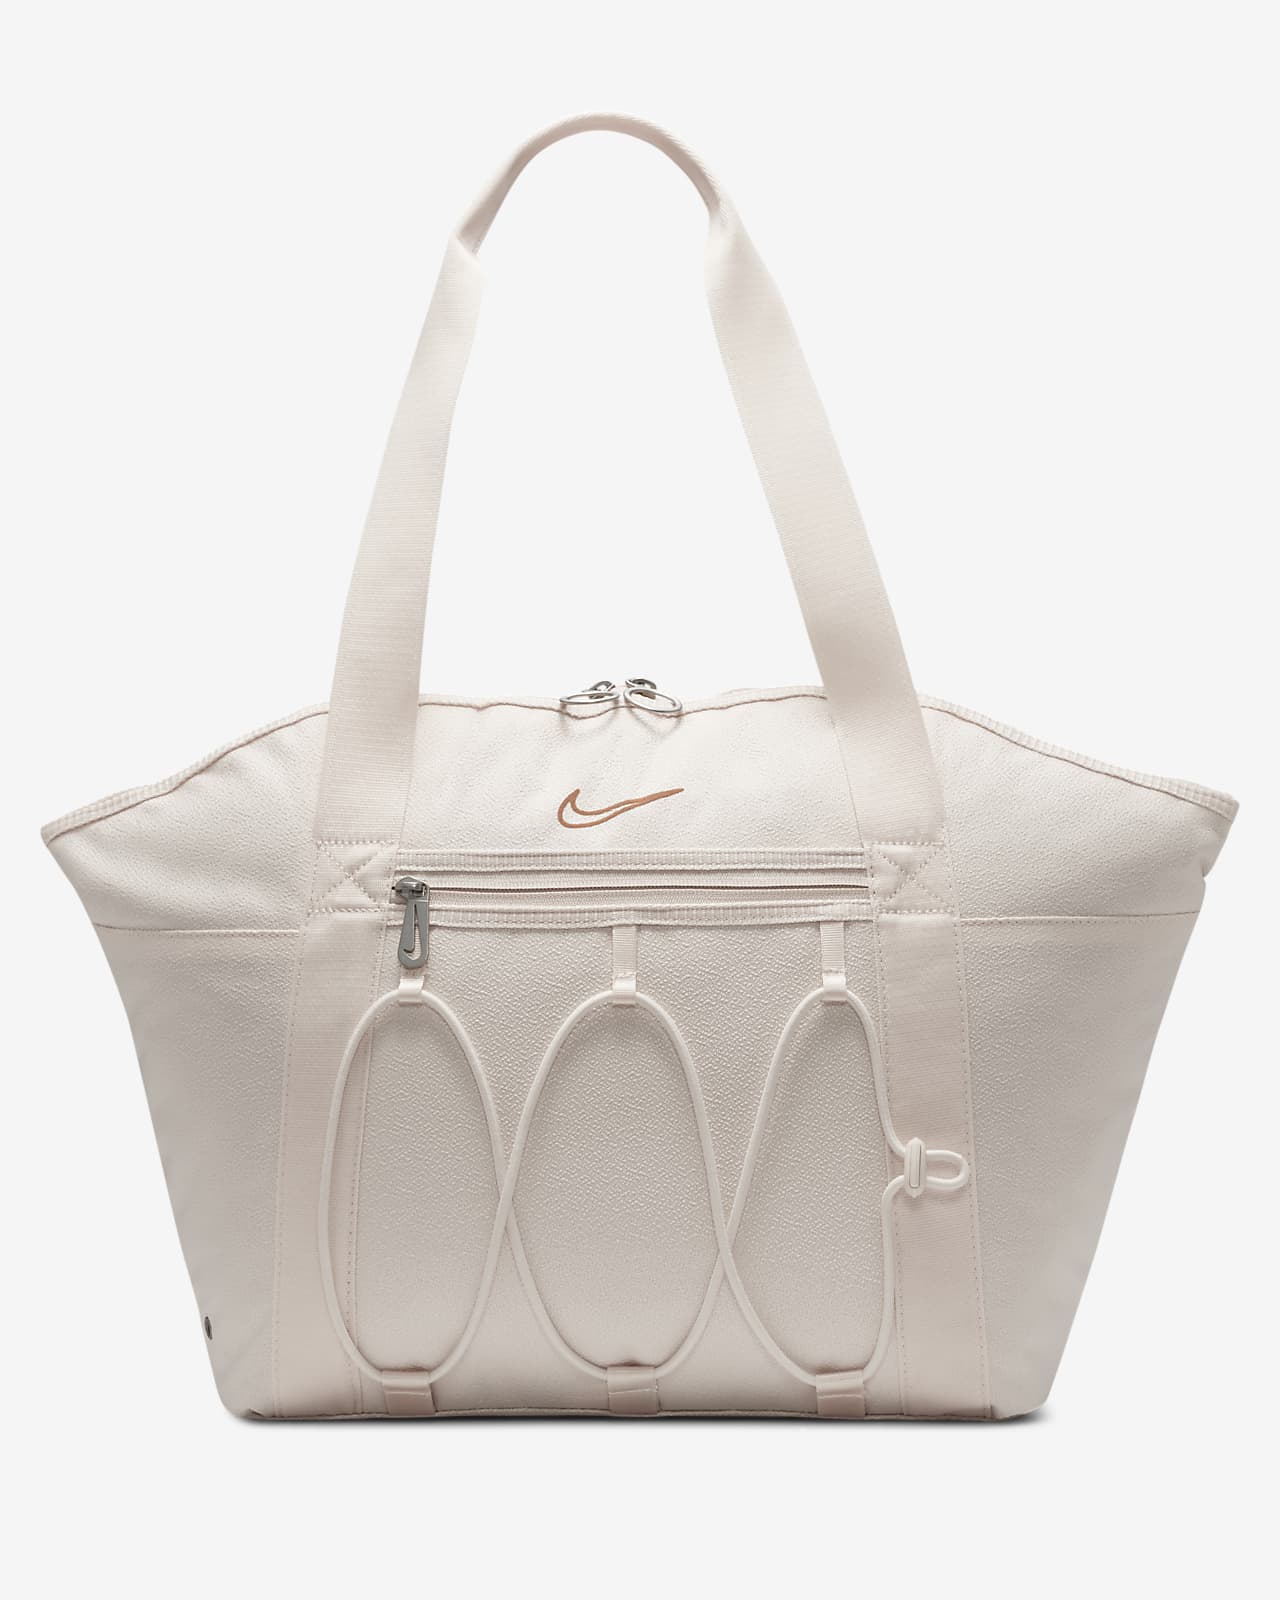 Women's Training Bag (18L). Nike.com